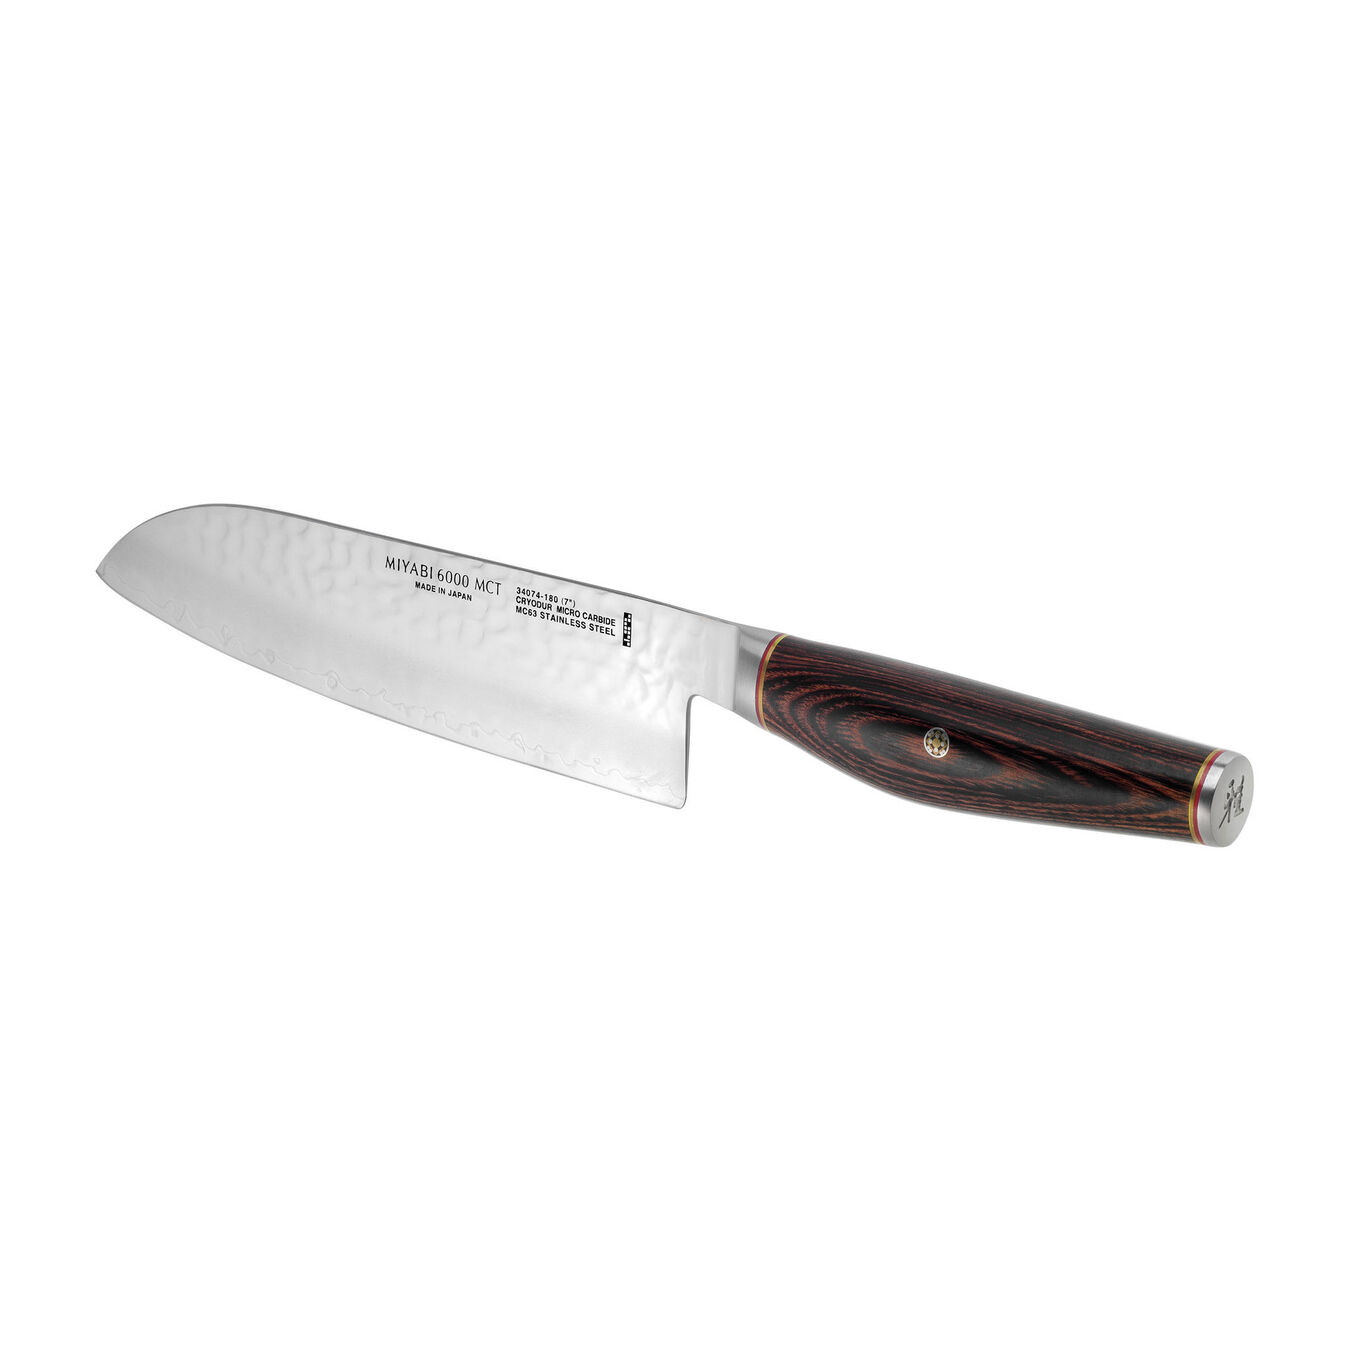 7-inch, Fine Edge Santoku Knife,,large 3